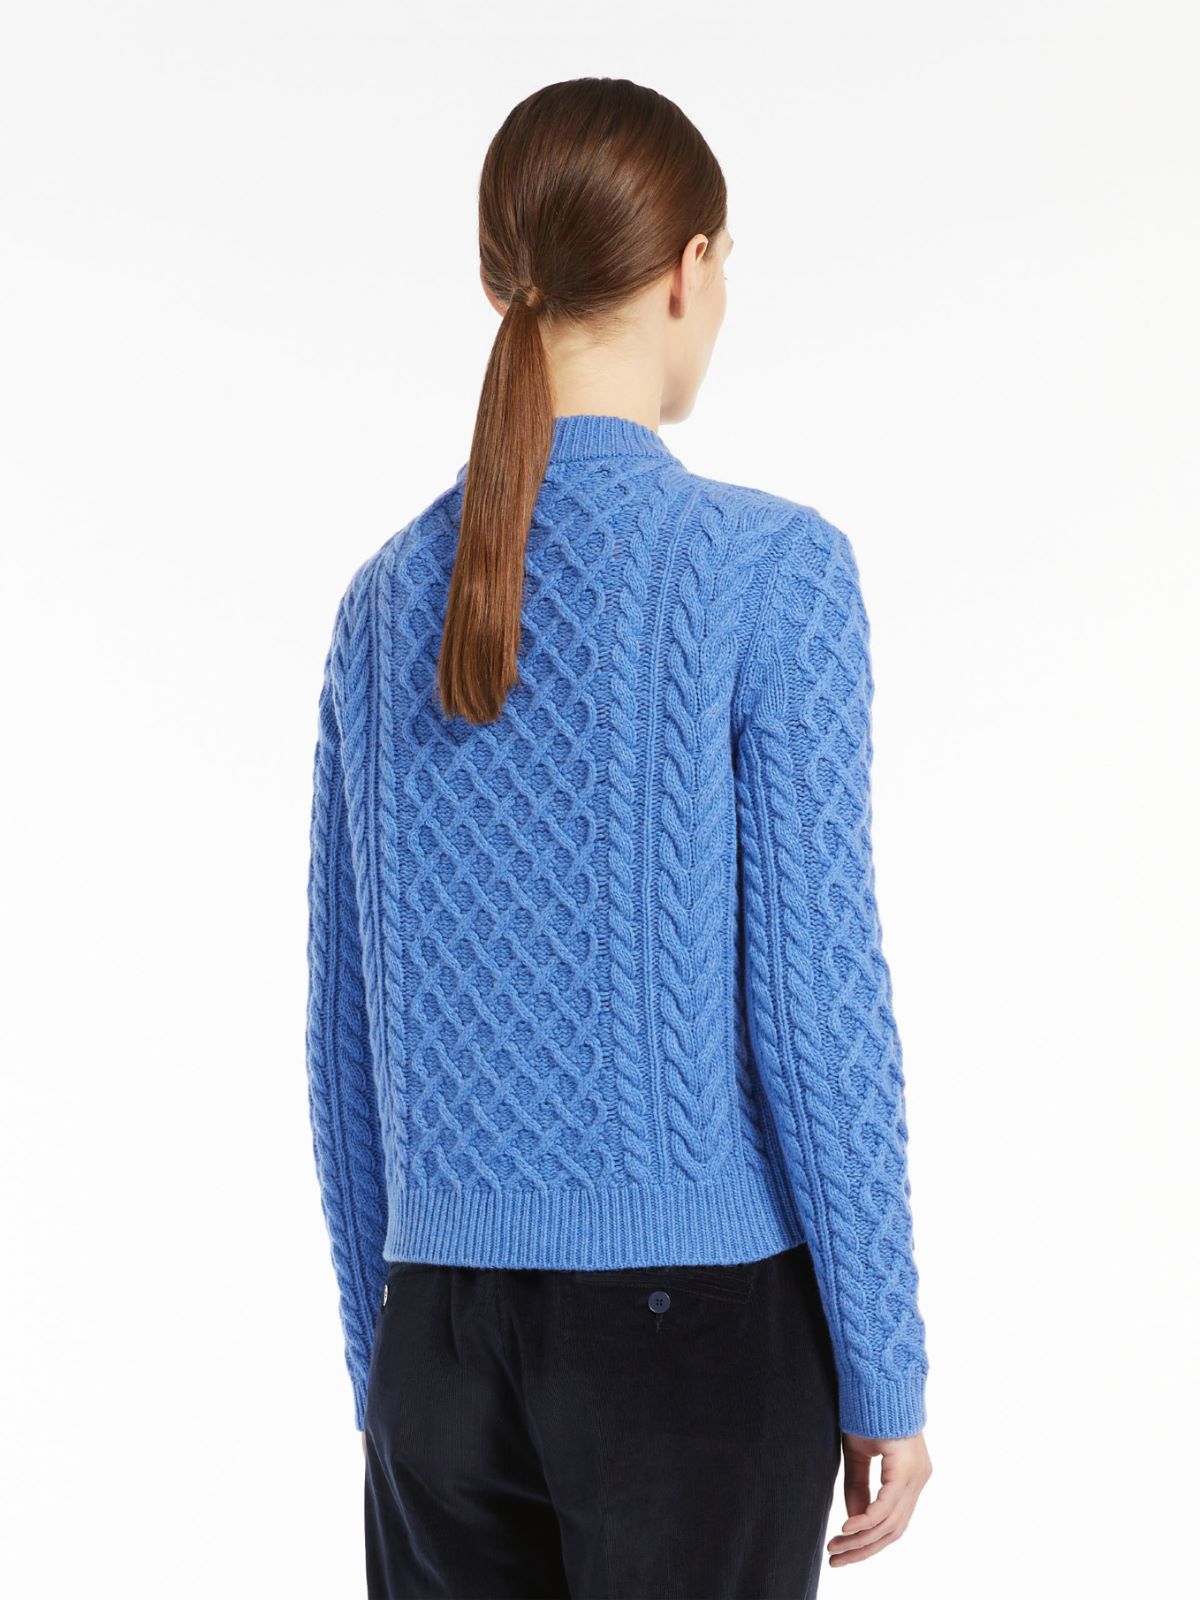 Carded wool sweater - LIGHT BLUE - Weekend Max Mara - 3